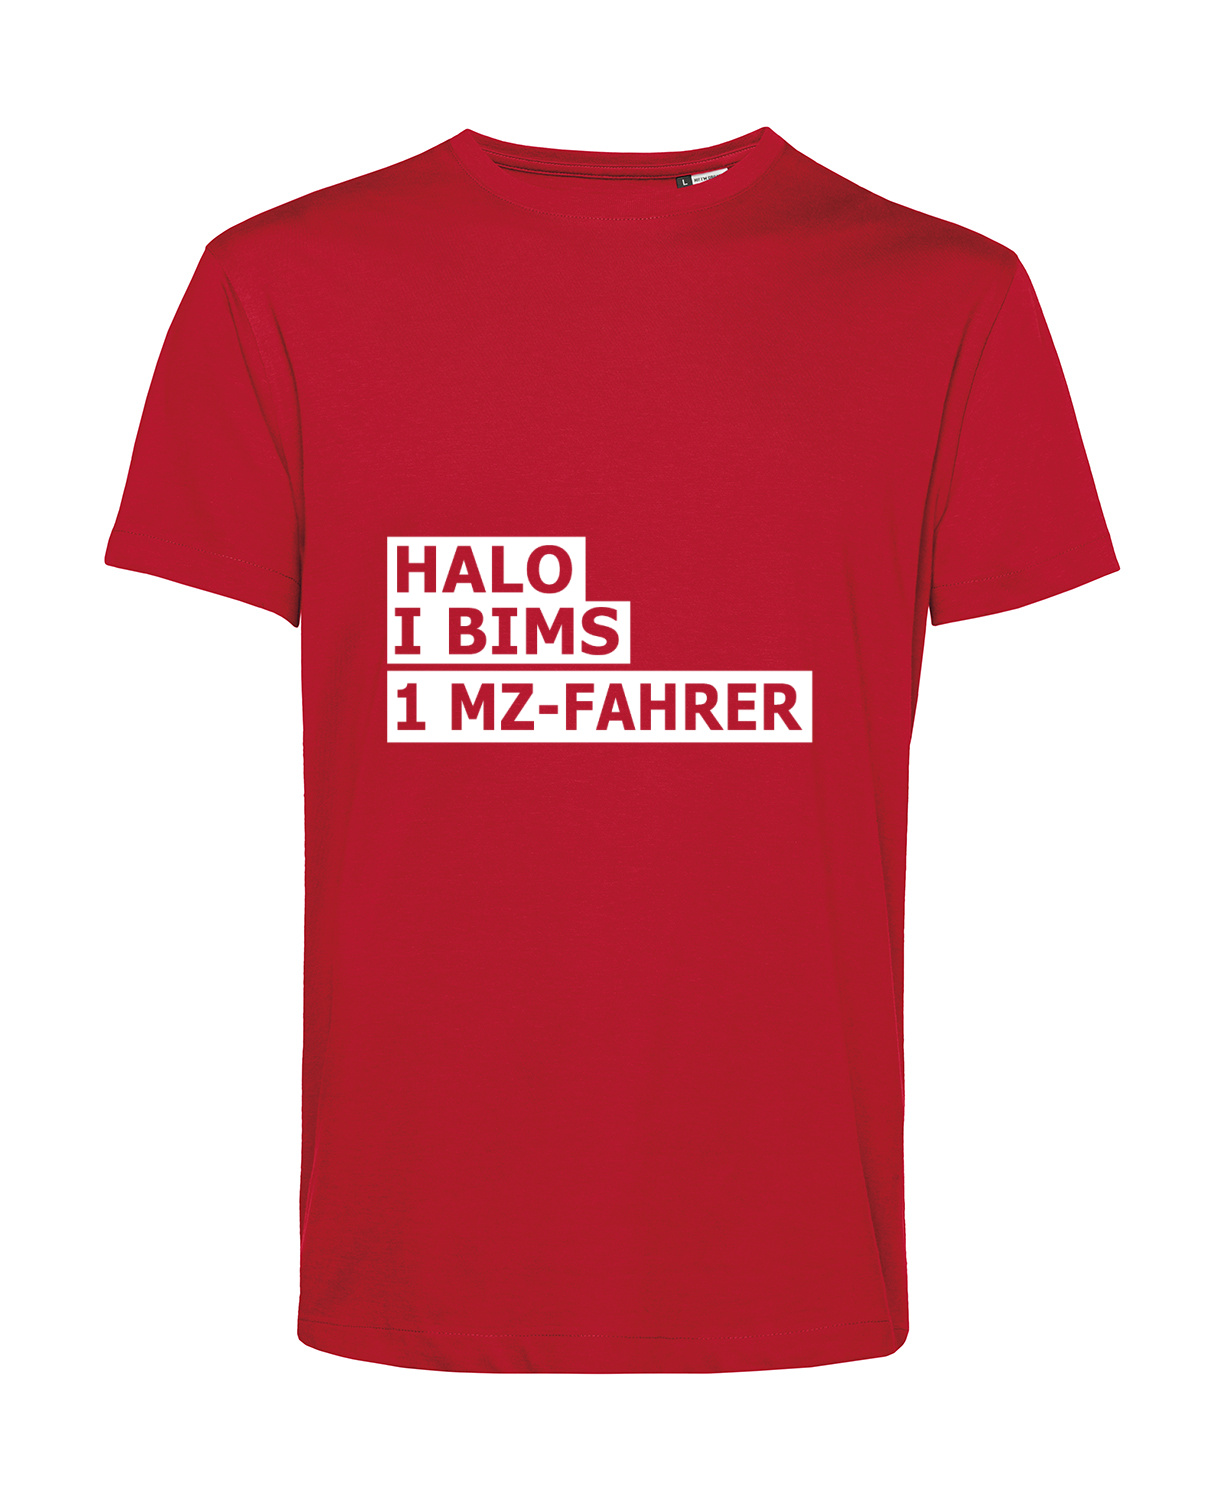 Nachhaltiges T-Shirt Herren 2Takter - Halo I bims 1 MZ-Fahrer